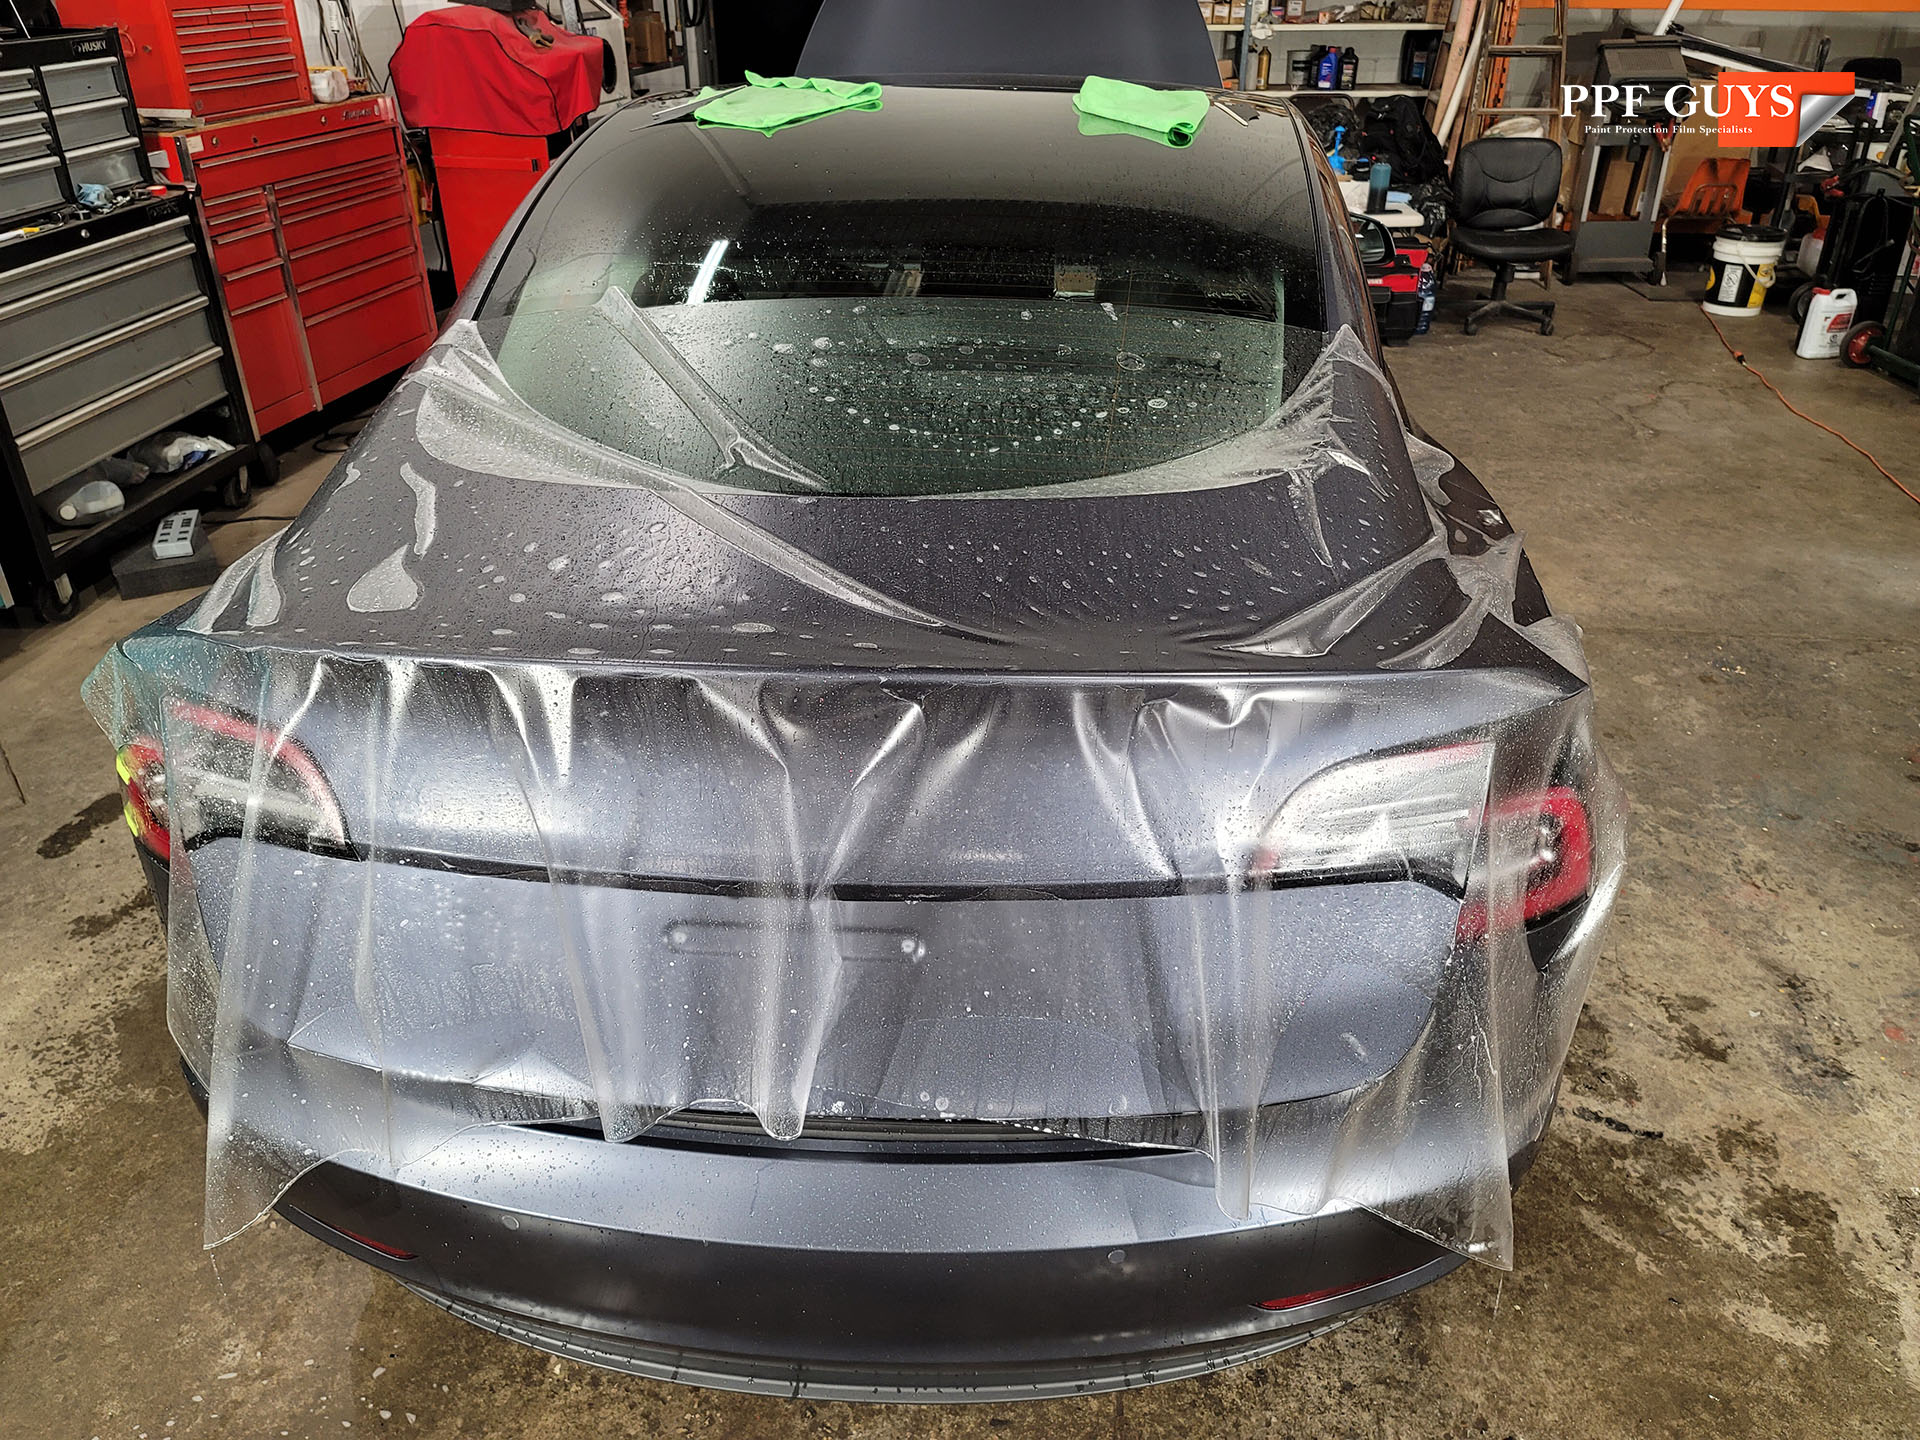 PPF Guys Tesla Model 3 Xpel Stealth (12).jpg